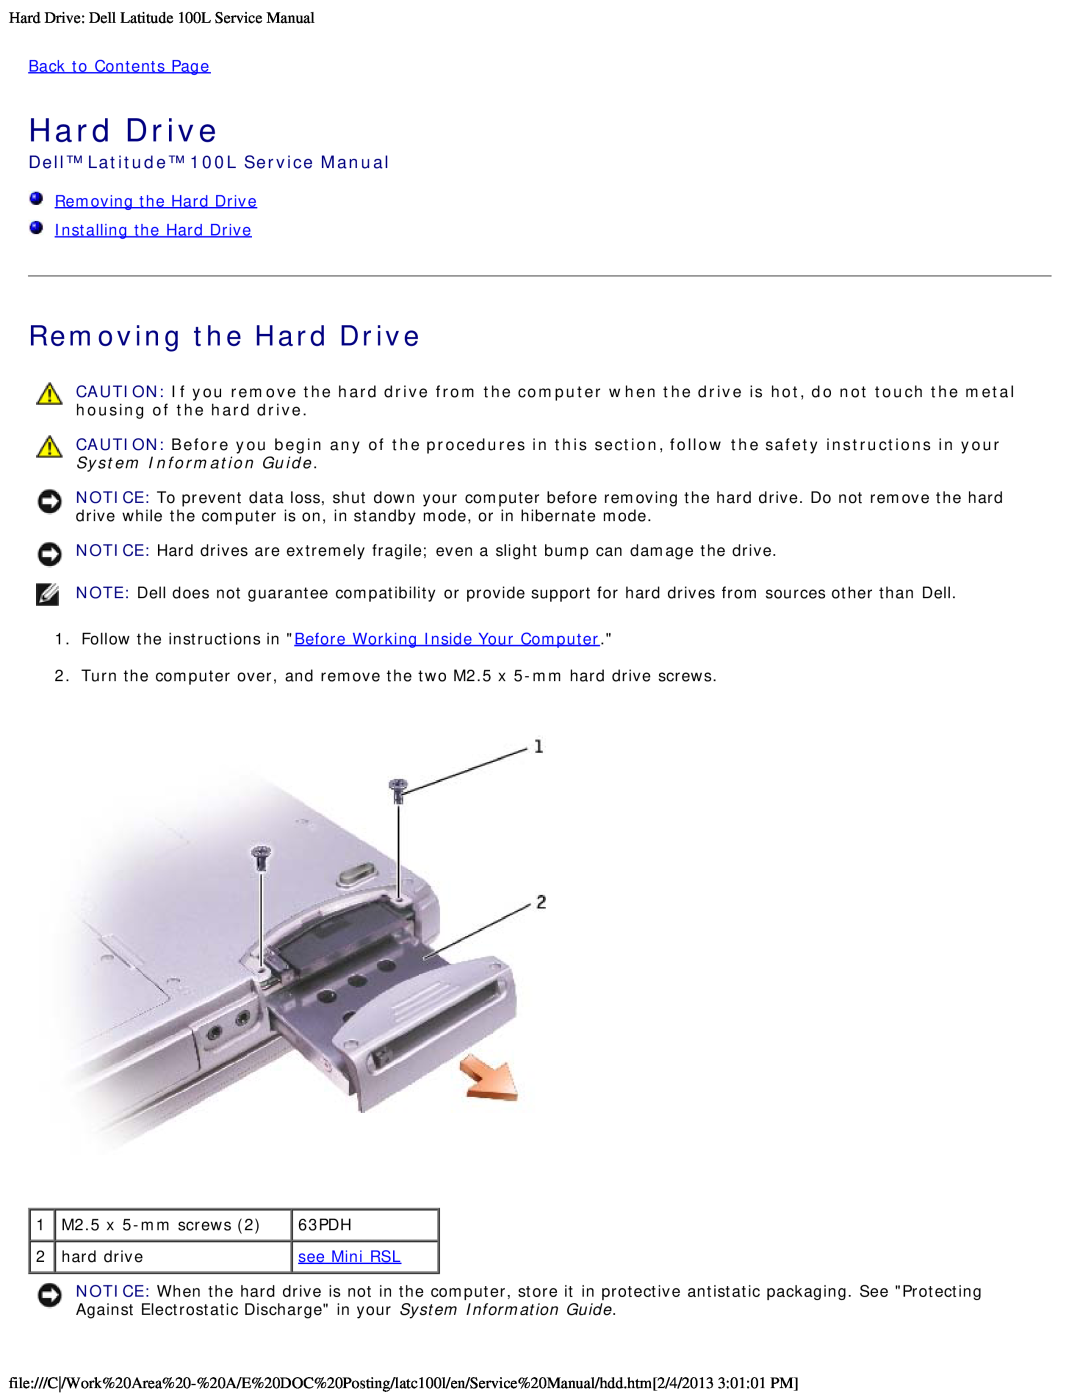 Dell Removing the Hard Drive Installing the Hard Drive, Dell Latitude 100L Service Manual, see Mini RSL 